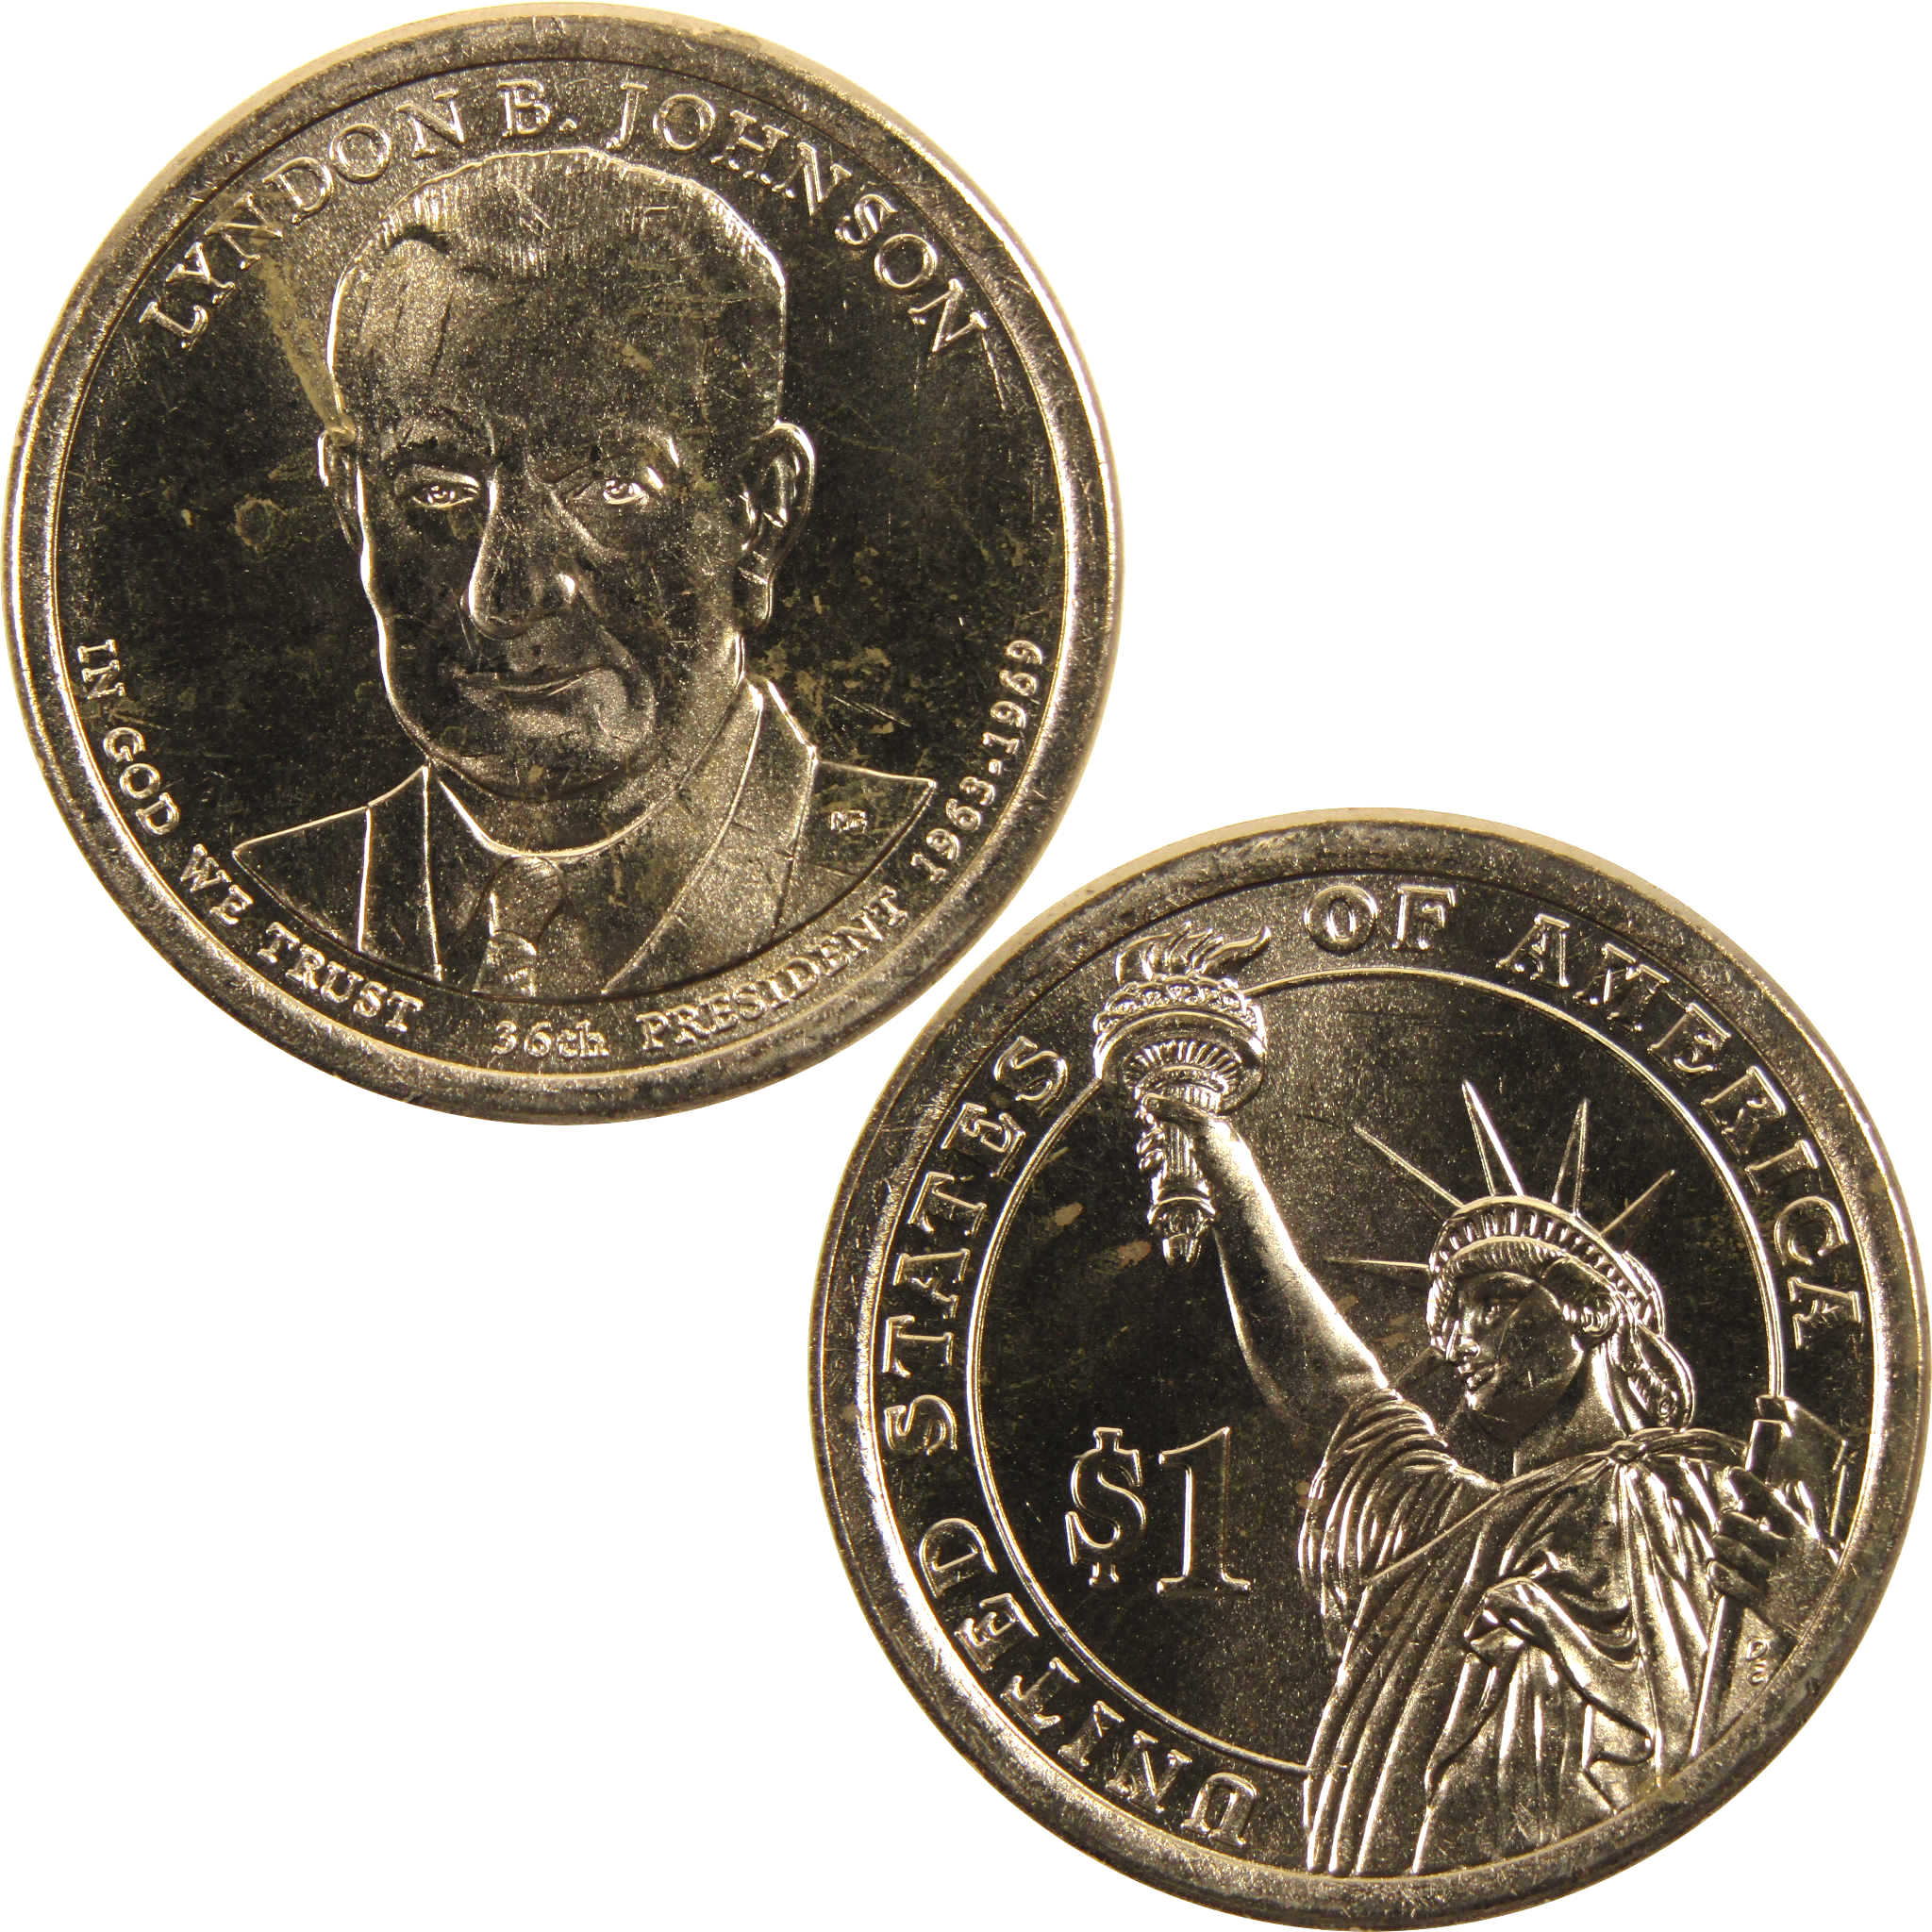 2015 D Lyndon B Johnson Presidential Dollar BU Uncirculated $1 Coin